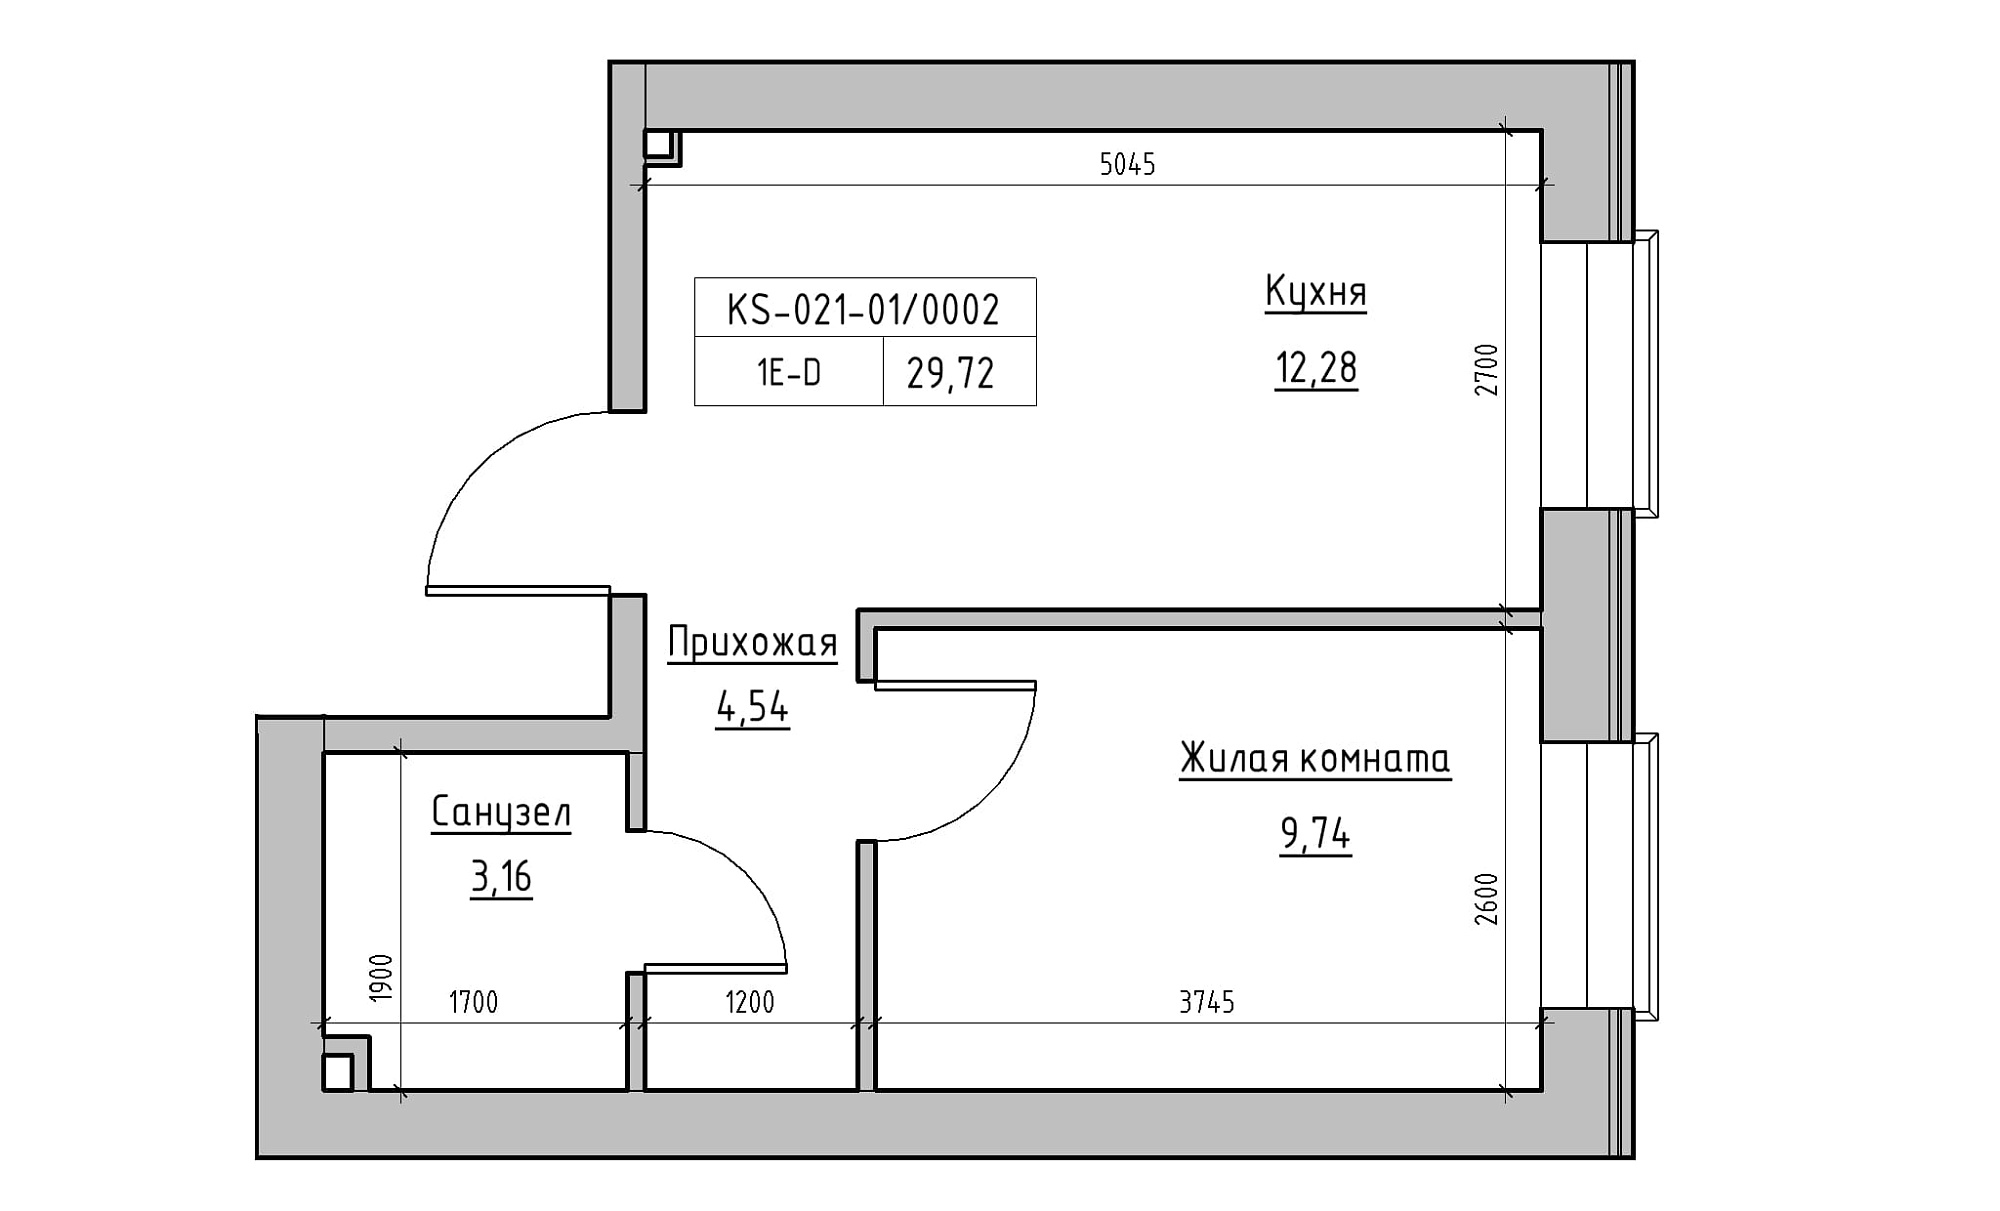 Planning 1-rm flats area 29.72m2, KS-021-01/0002.